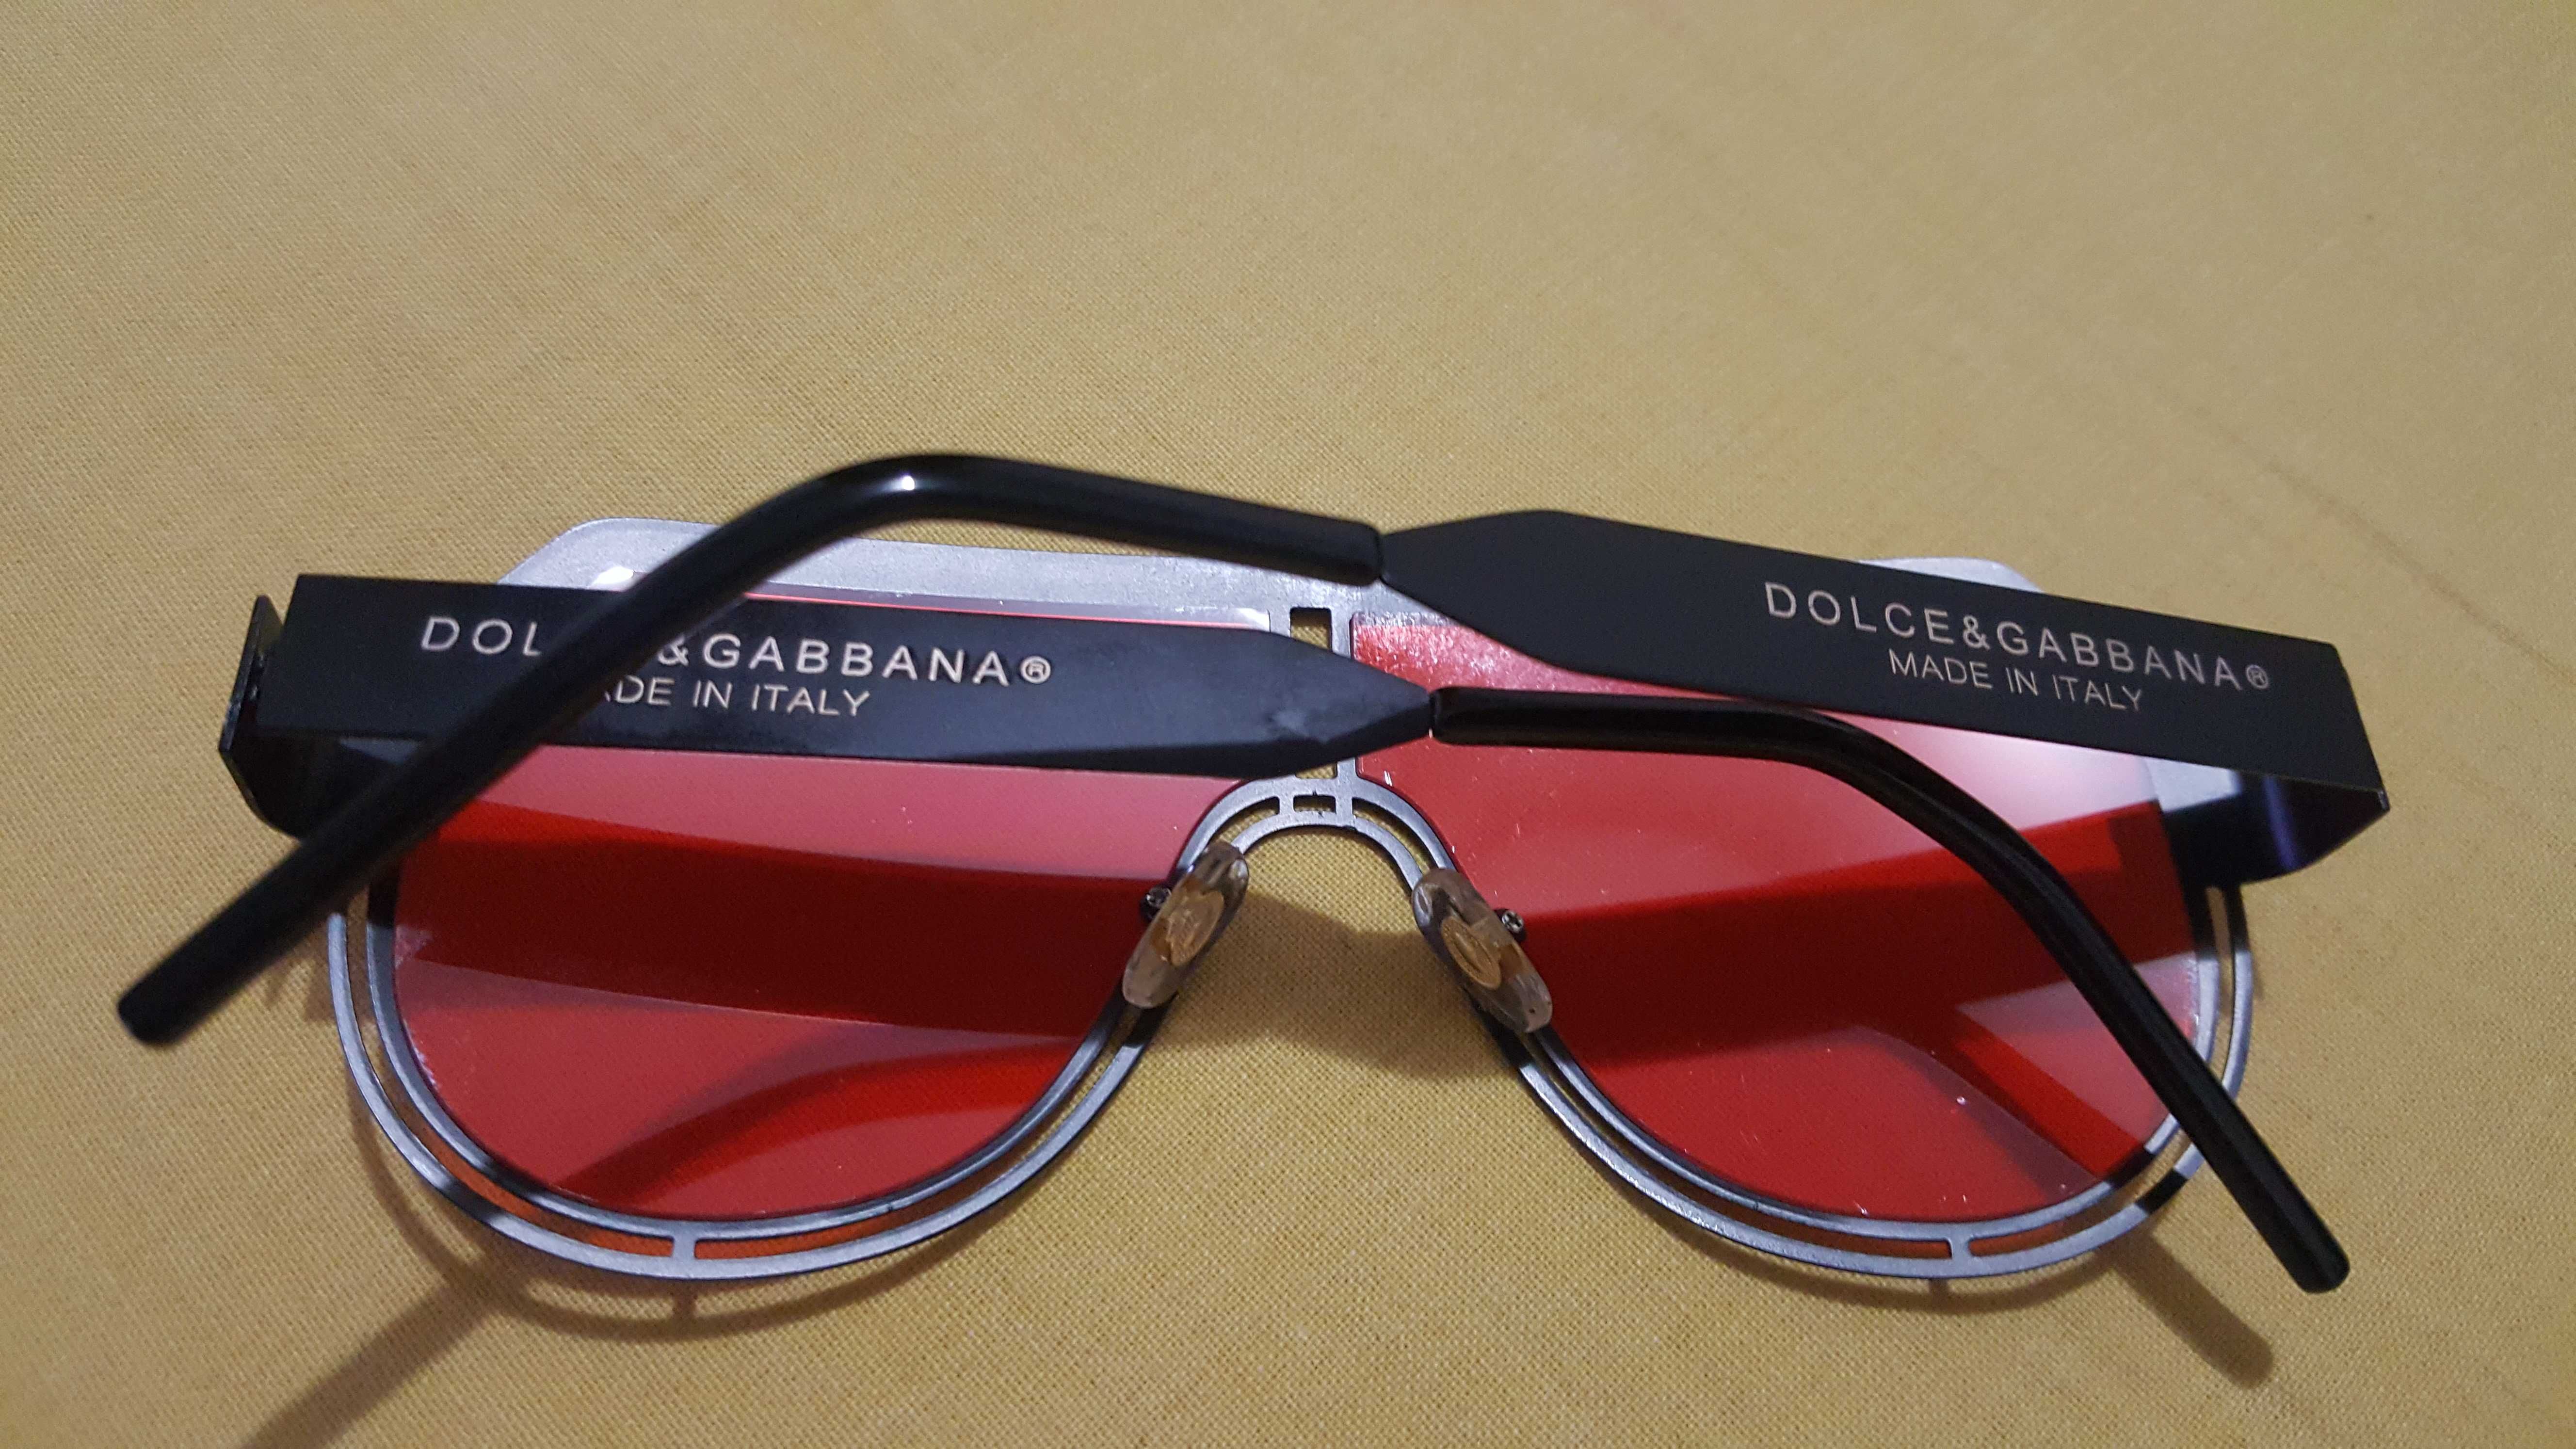 Dolce&Gabbana opигинални слънчеви очила